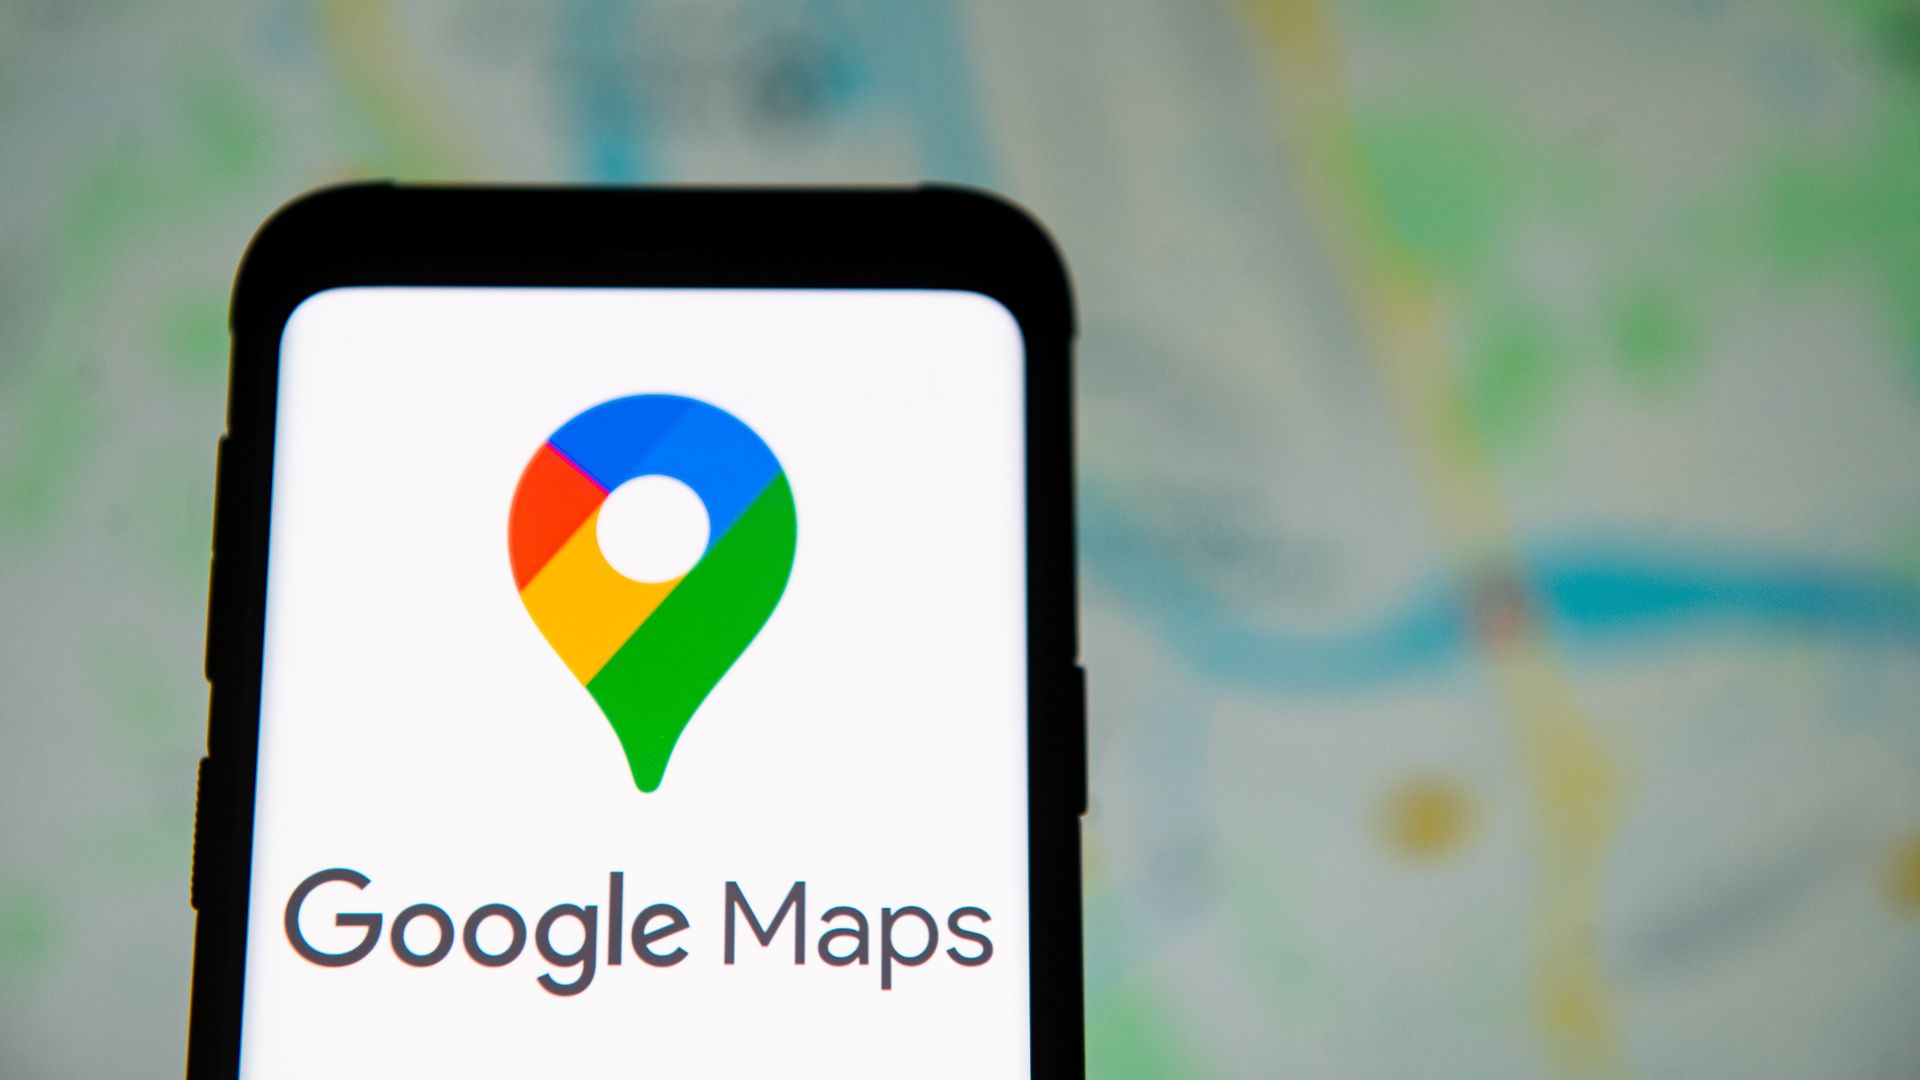 A photo illustration of a Google Maps logo on a smartphone.